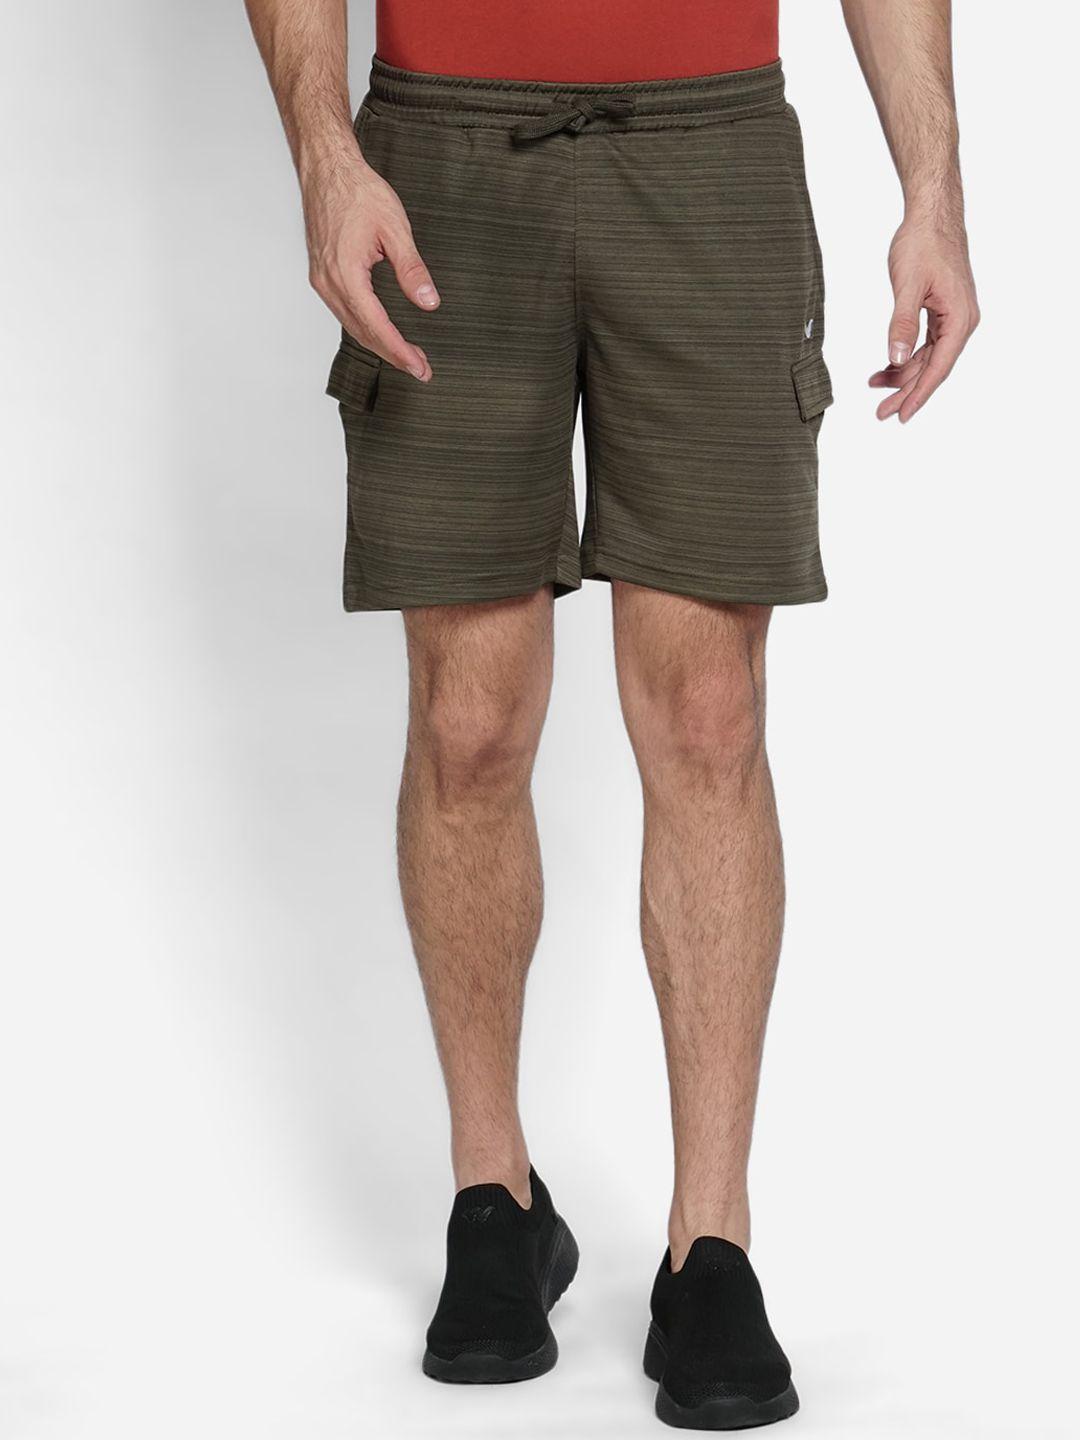 wildcraft men olive green striped sports shorts